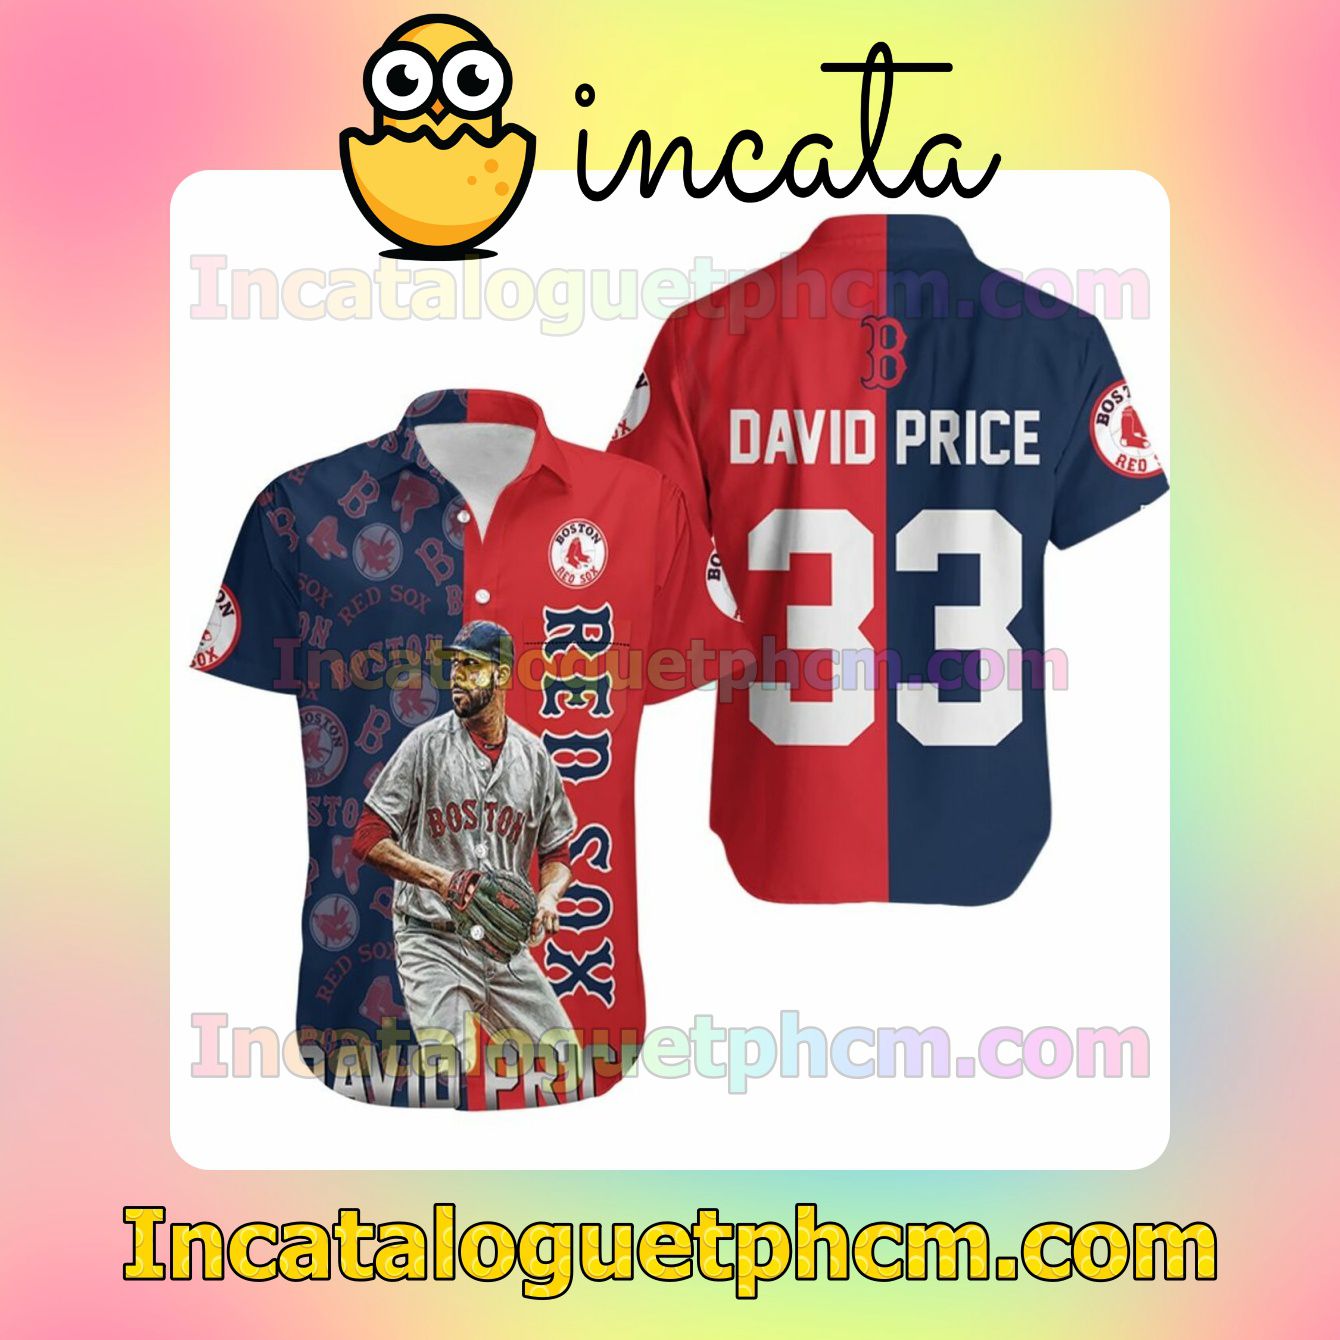 David Price 33 Boston Red Sox Custom Short Sleeve Shirt